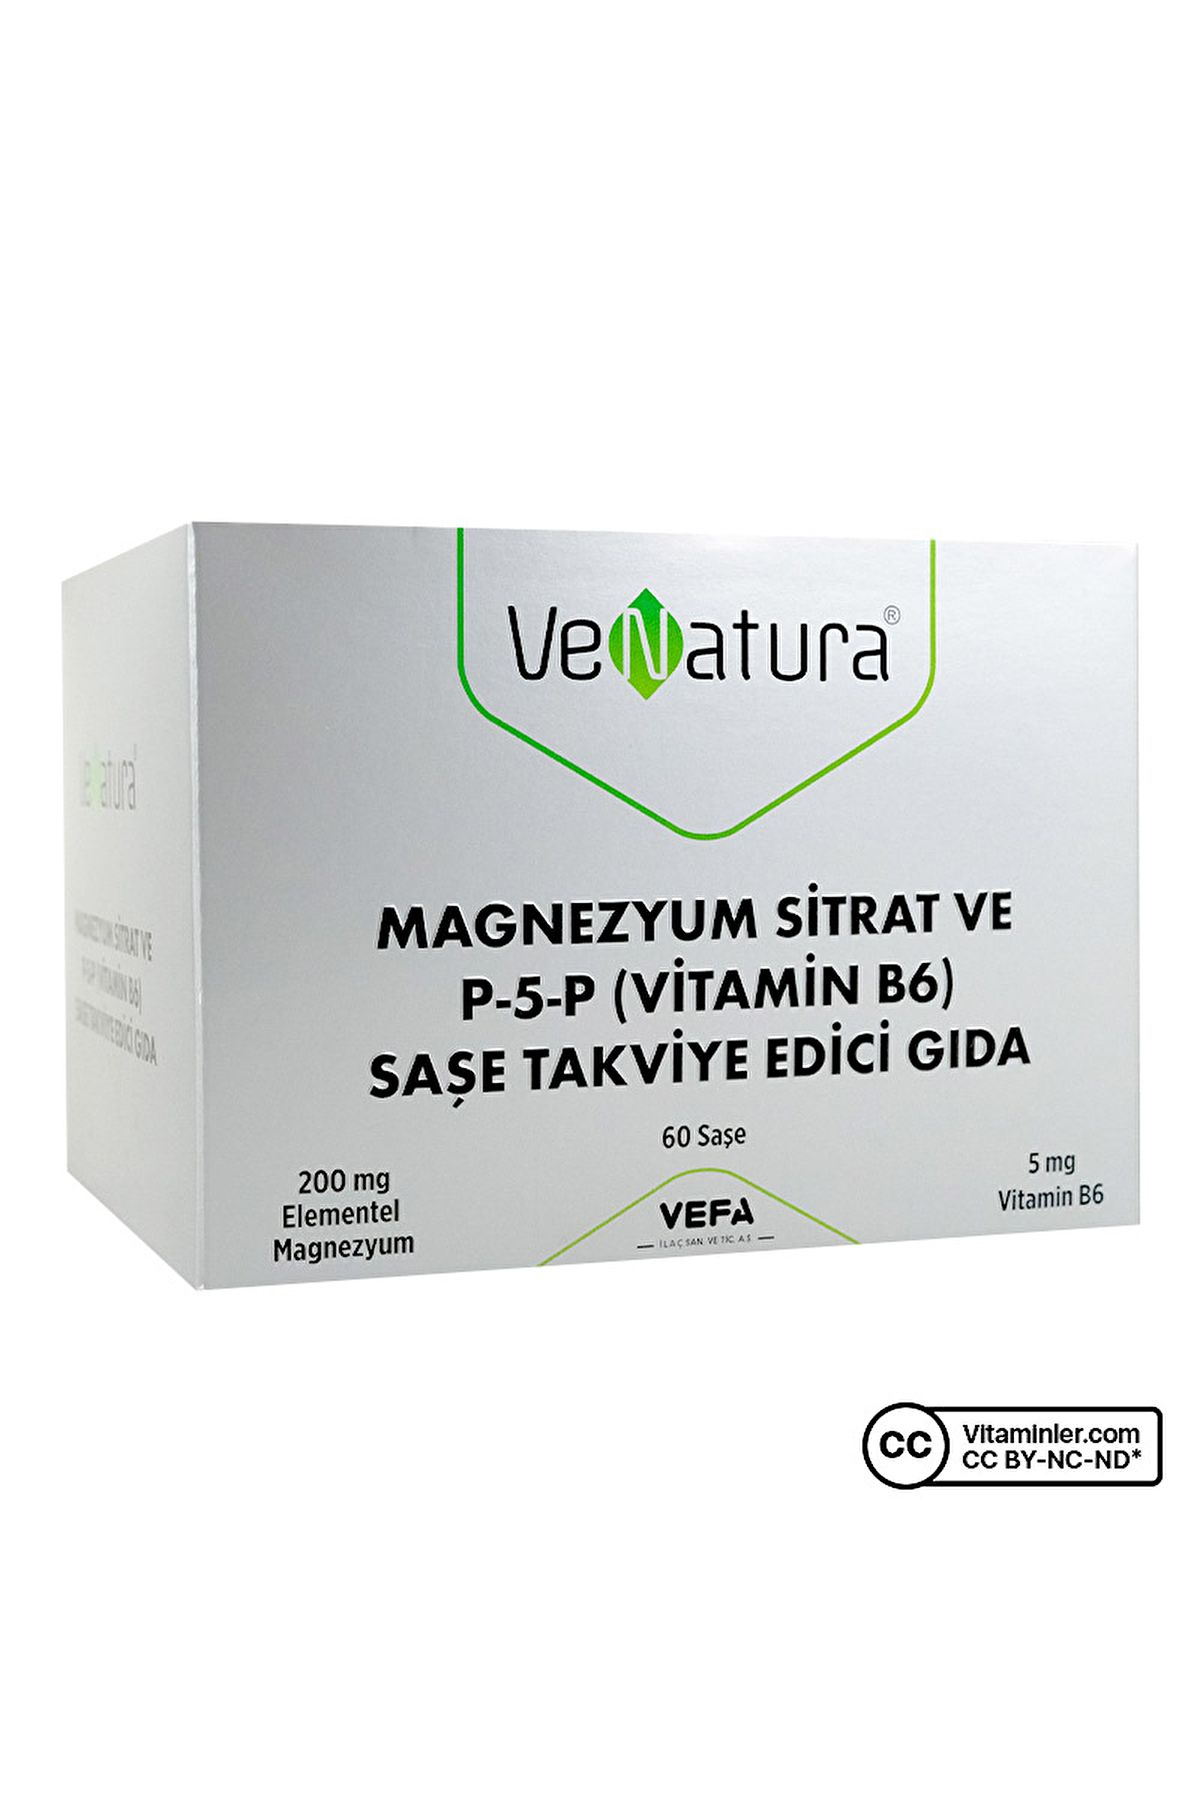 Venatura Magnezyum Sitrat Ve P-5-p (VİTAMİN B6) 60 Saşe